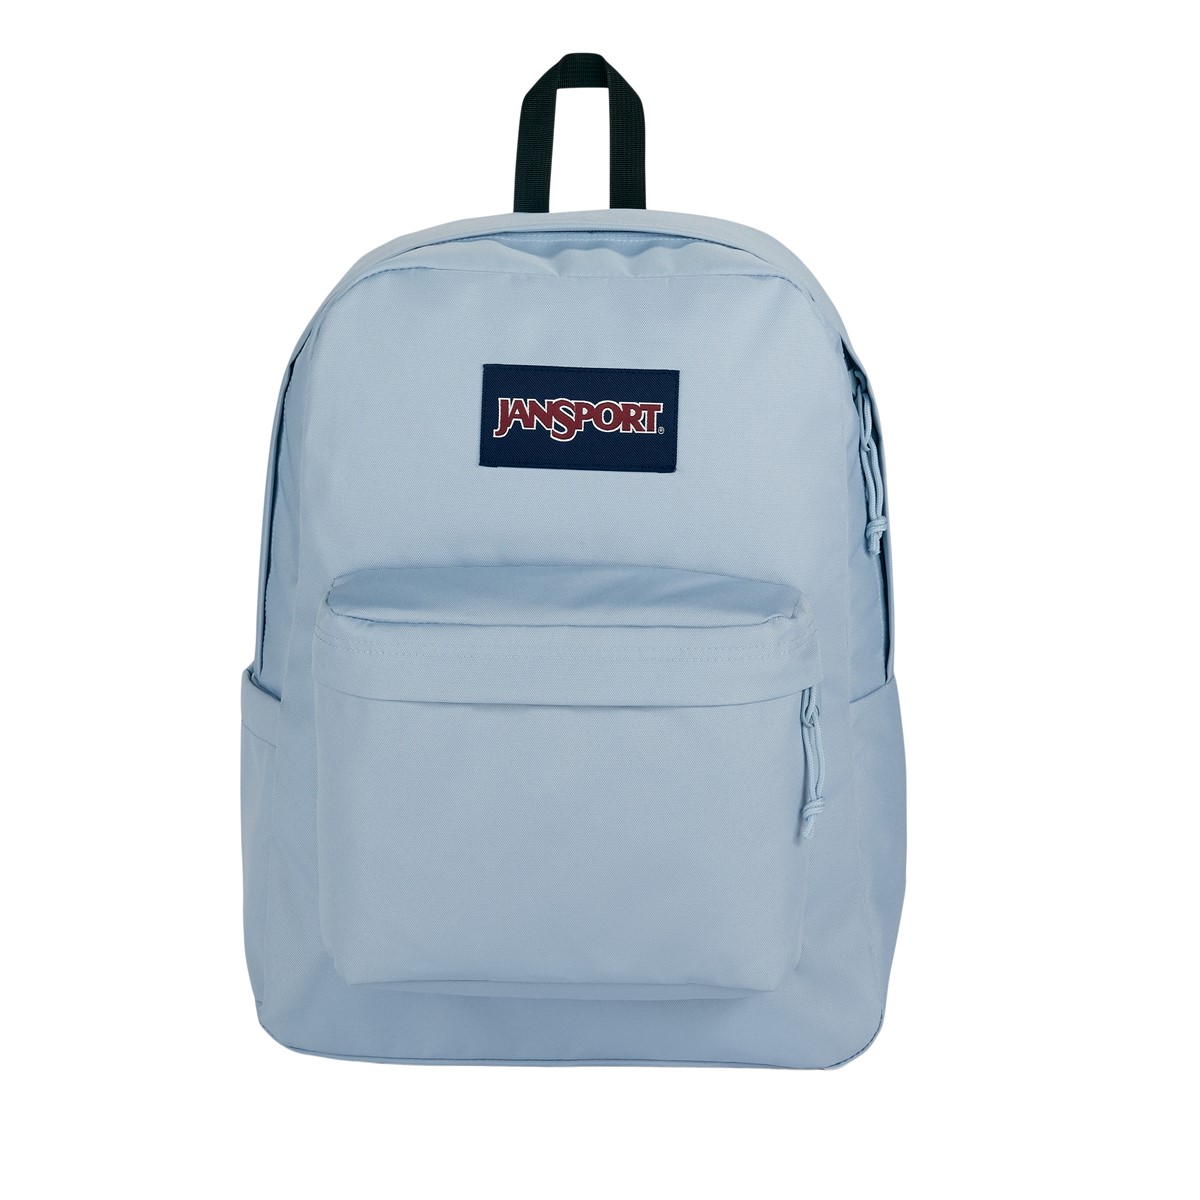 SuperBreak PLUS Backpack in Blue